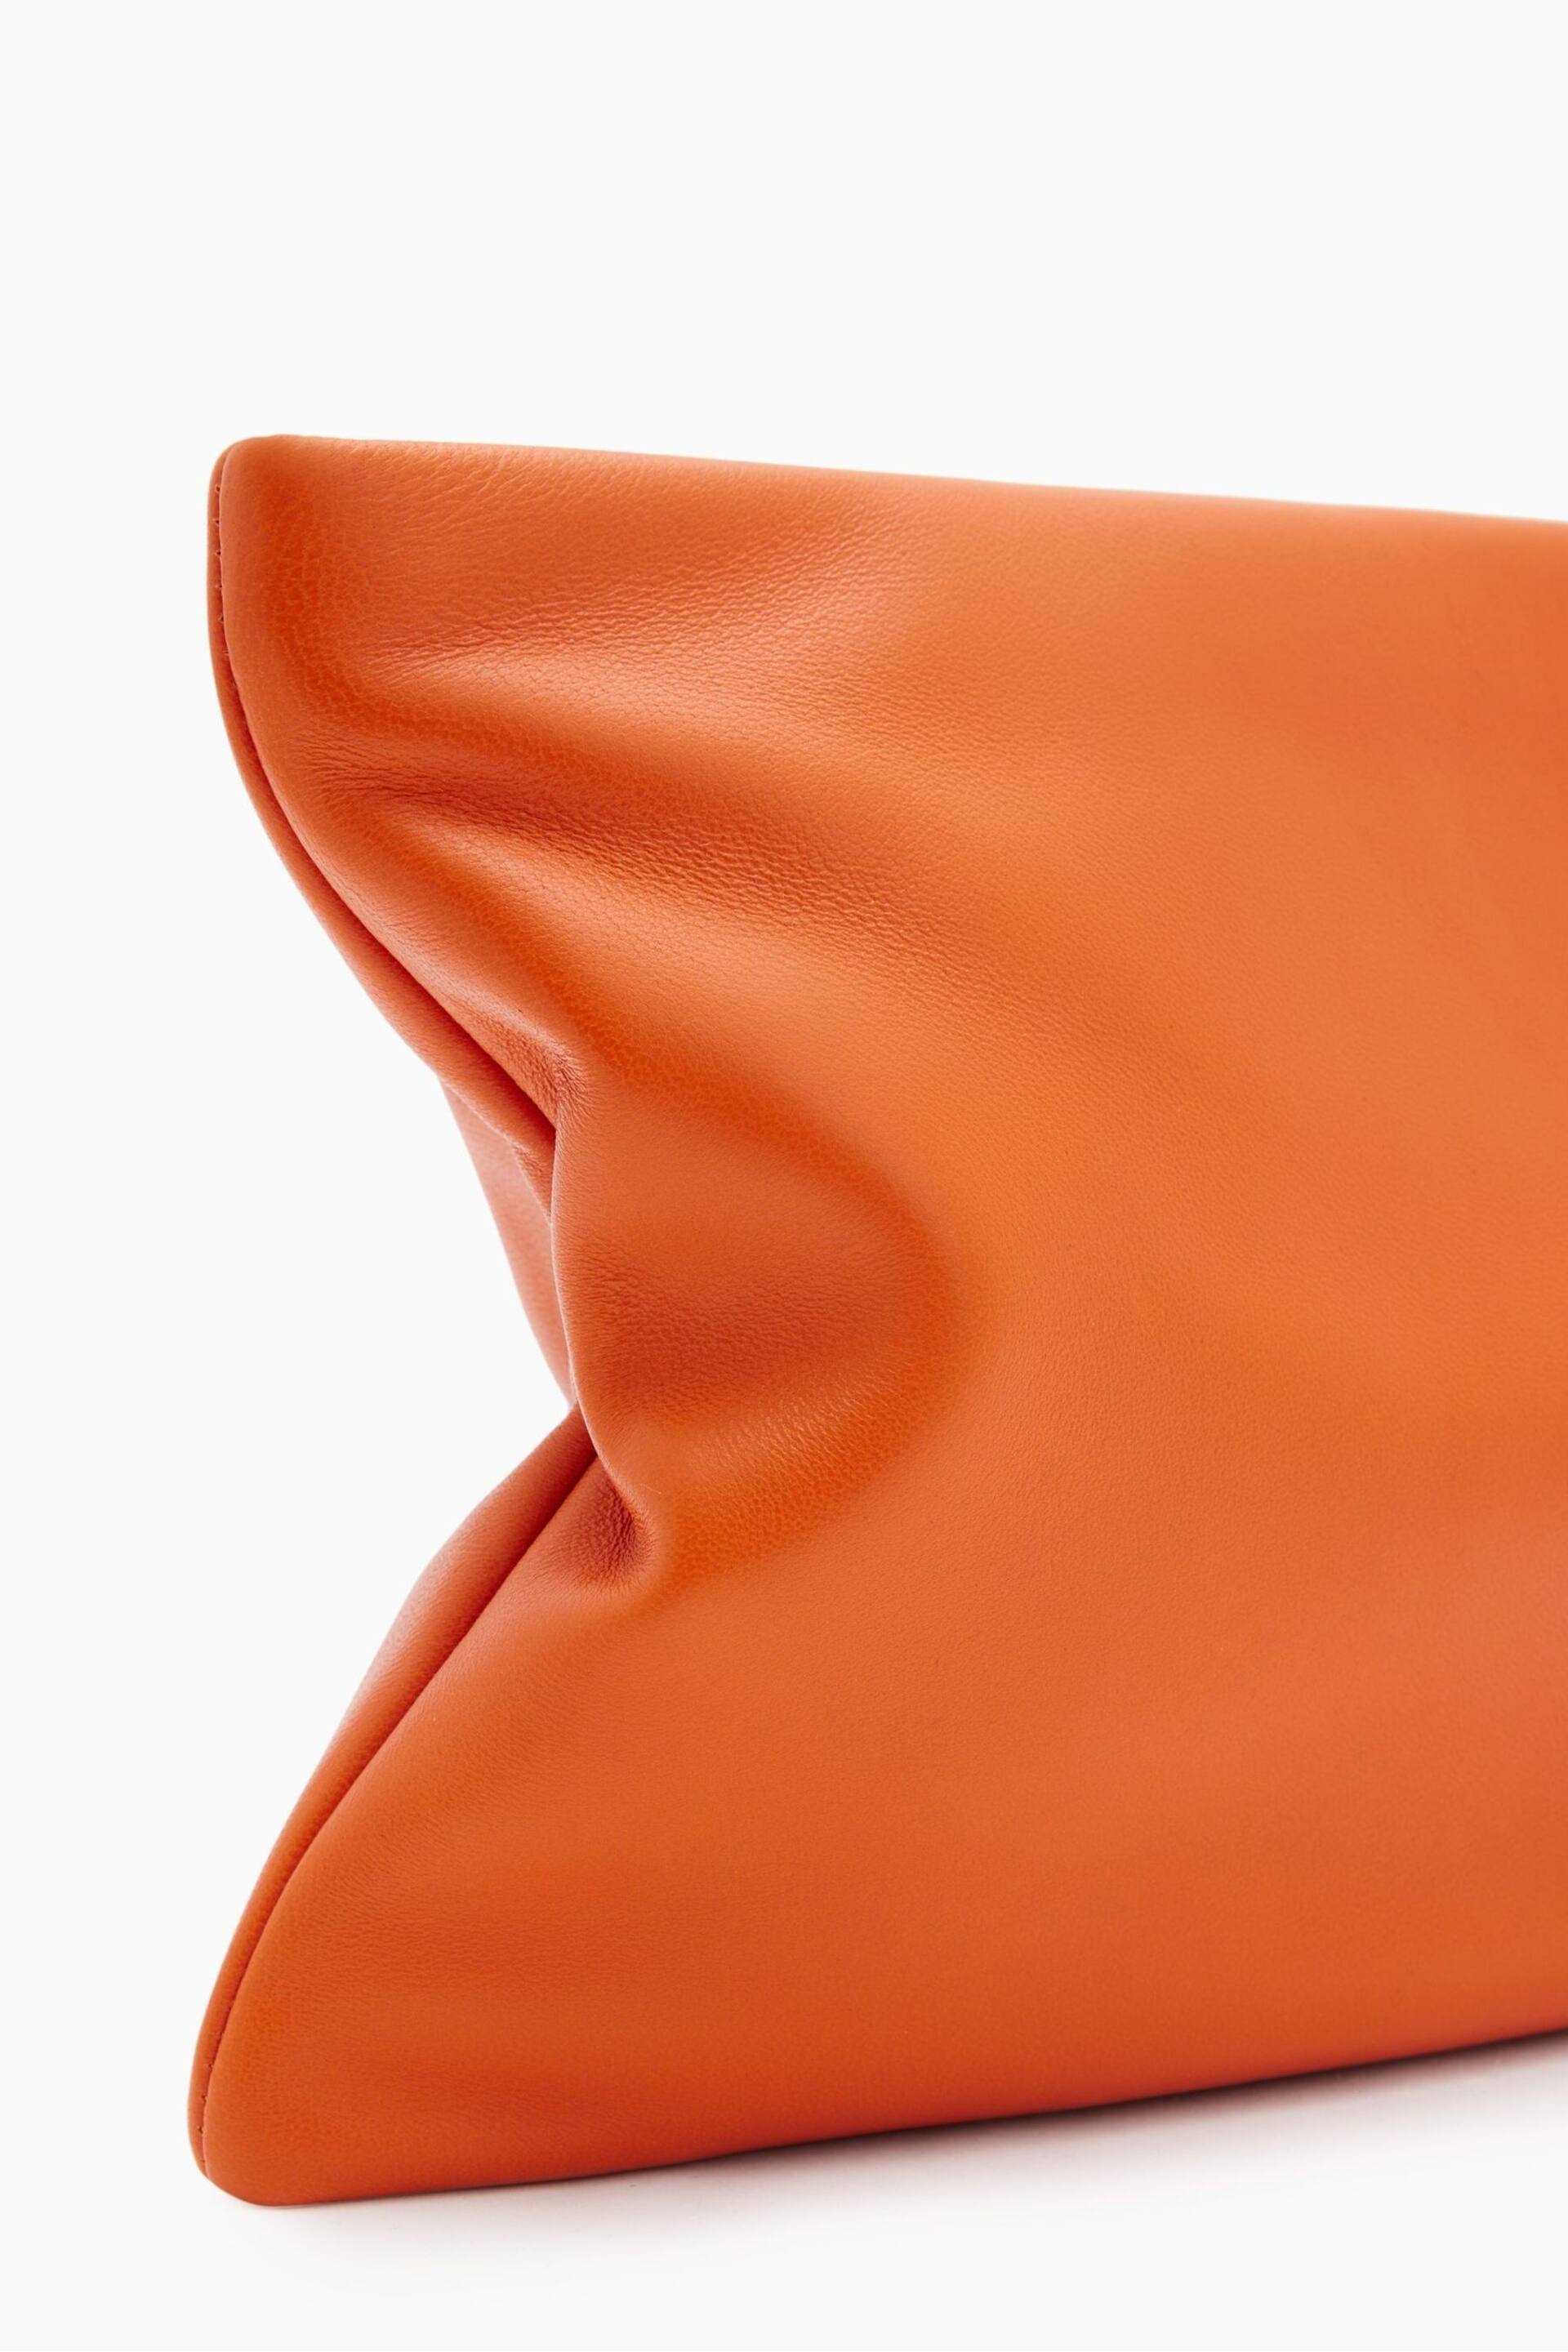 AllSaints Orange Bettina Clutch - Image 5 of 6